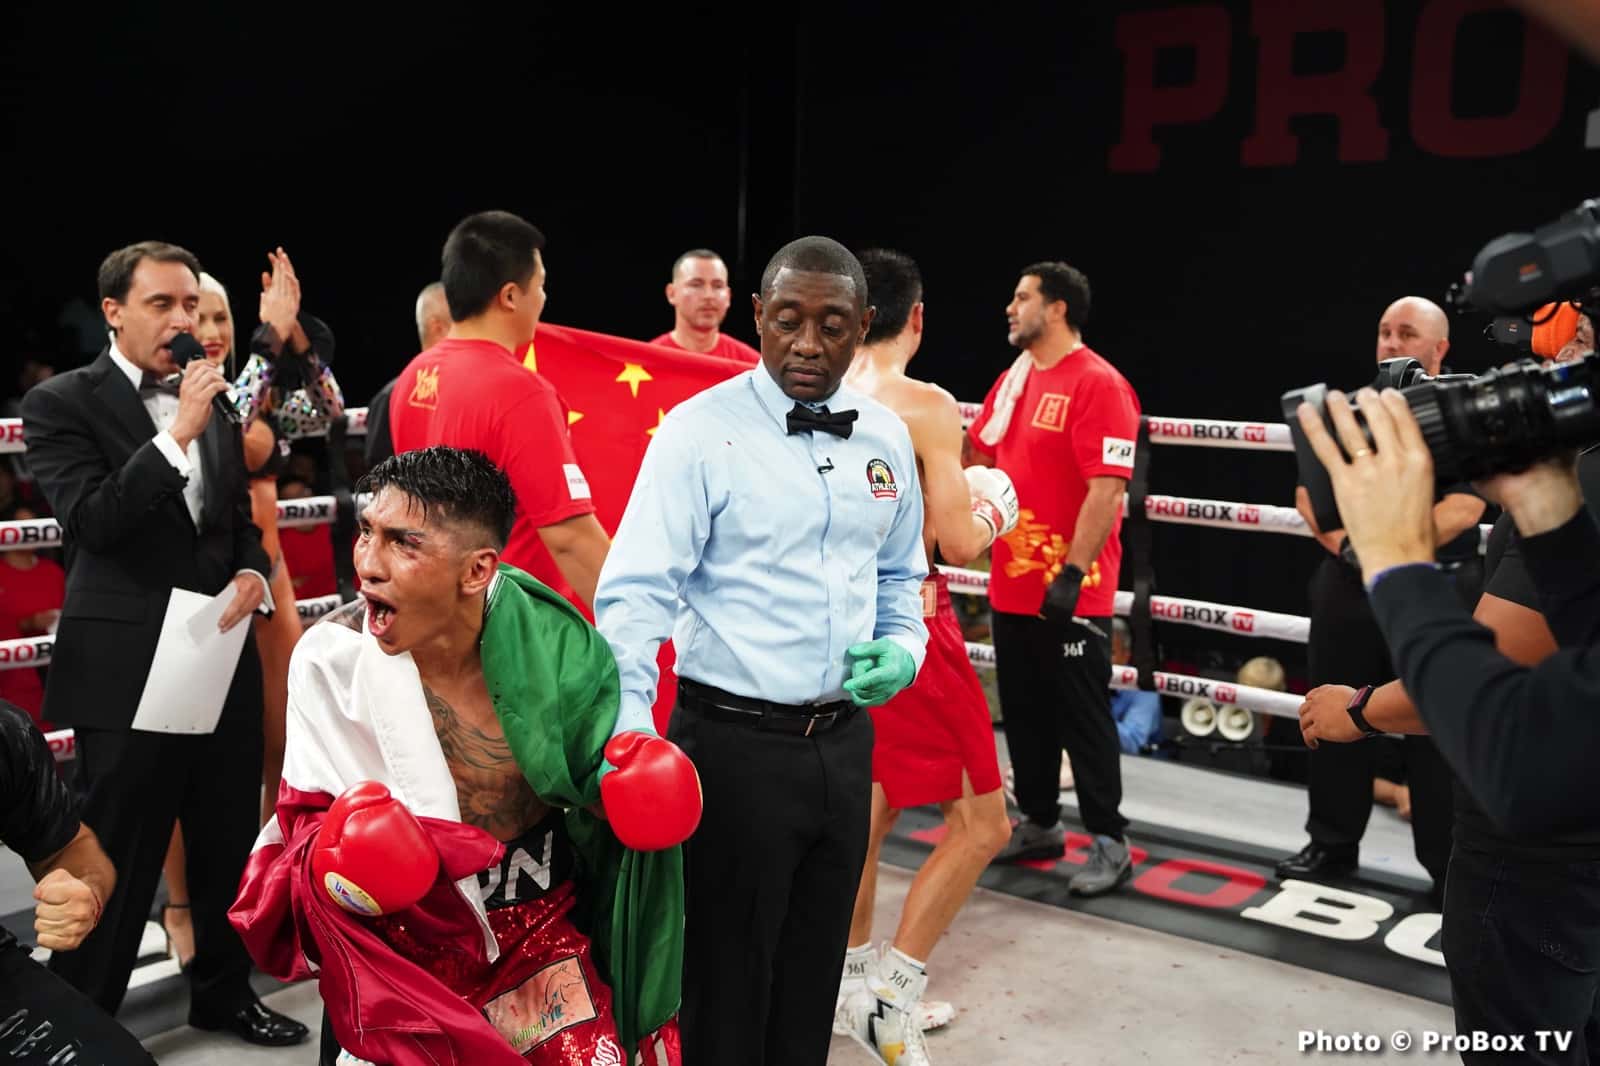 Benitez defeats Xu Can on ProBox TV - Boxing Results